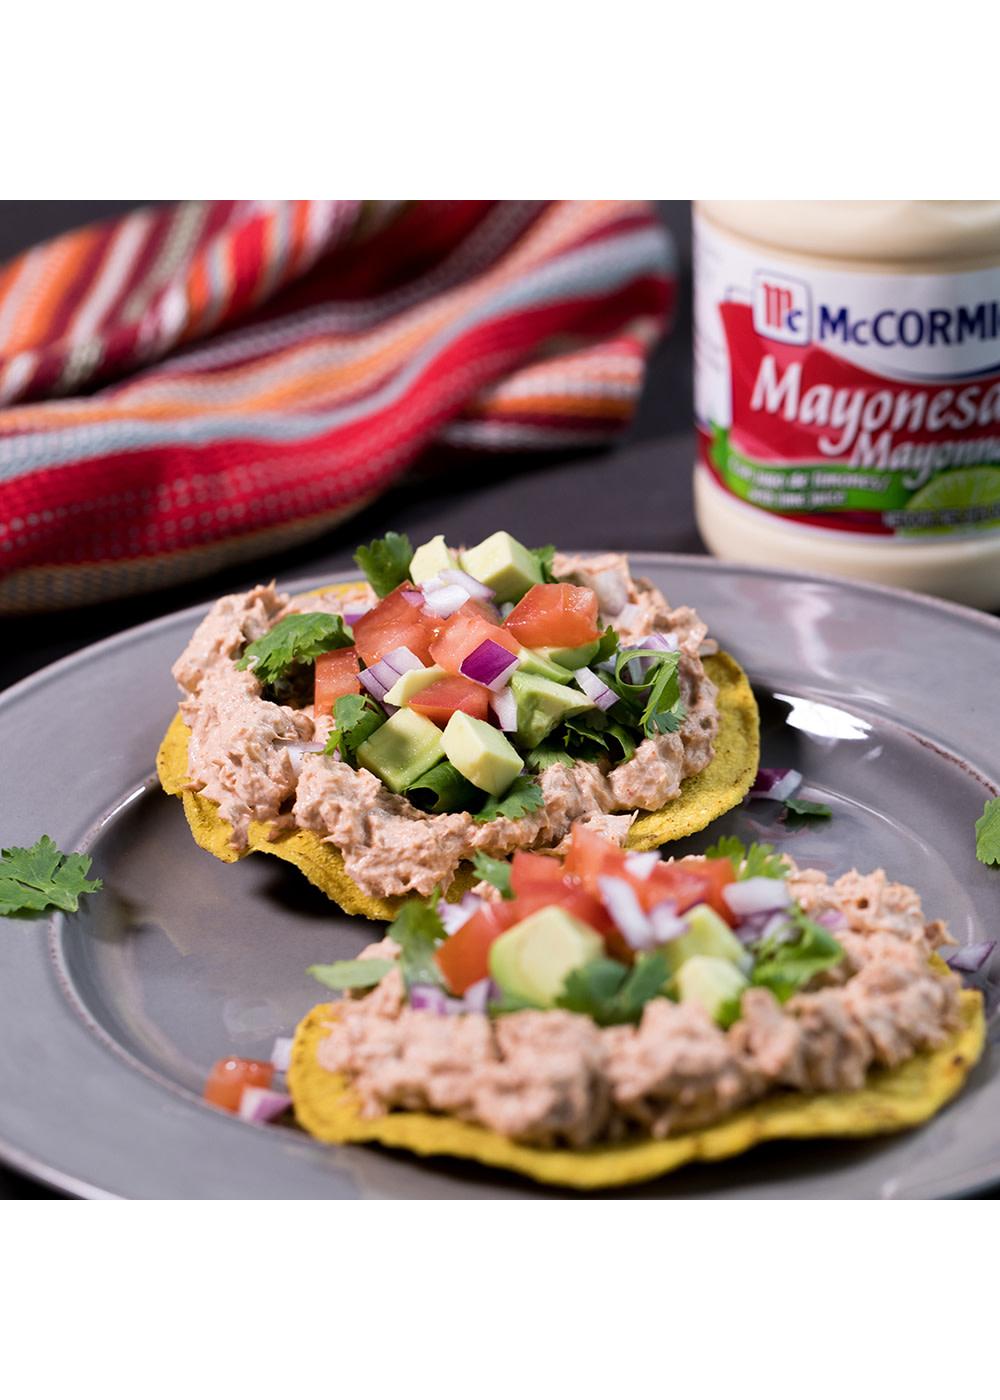 McCormick Mayonesa Sandwich Spread Jalapeno - Shop Condiments at H-E-B